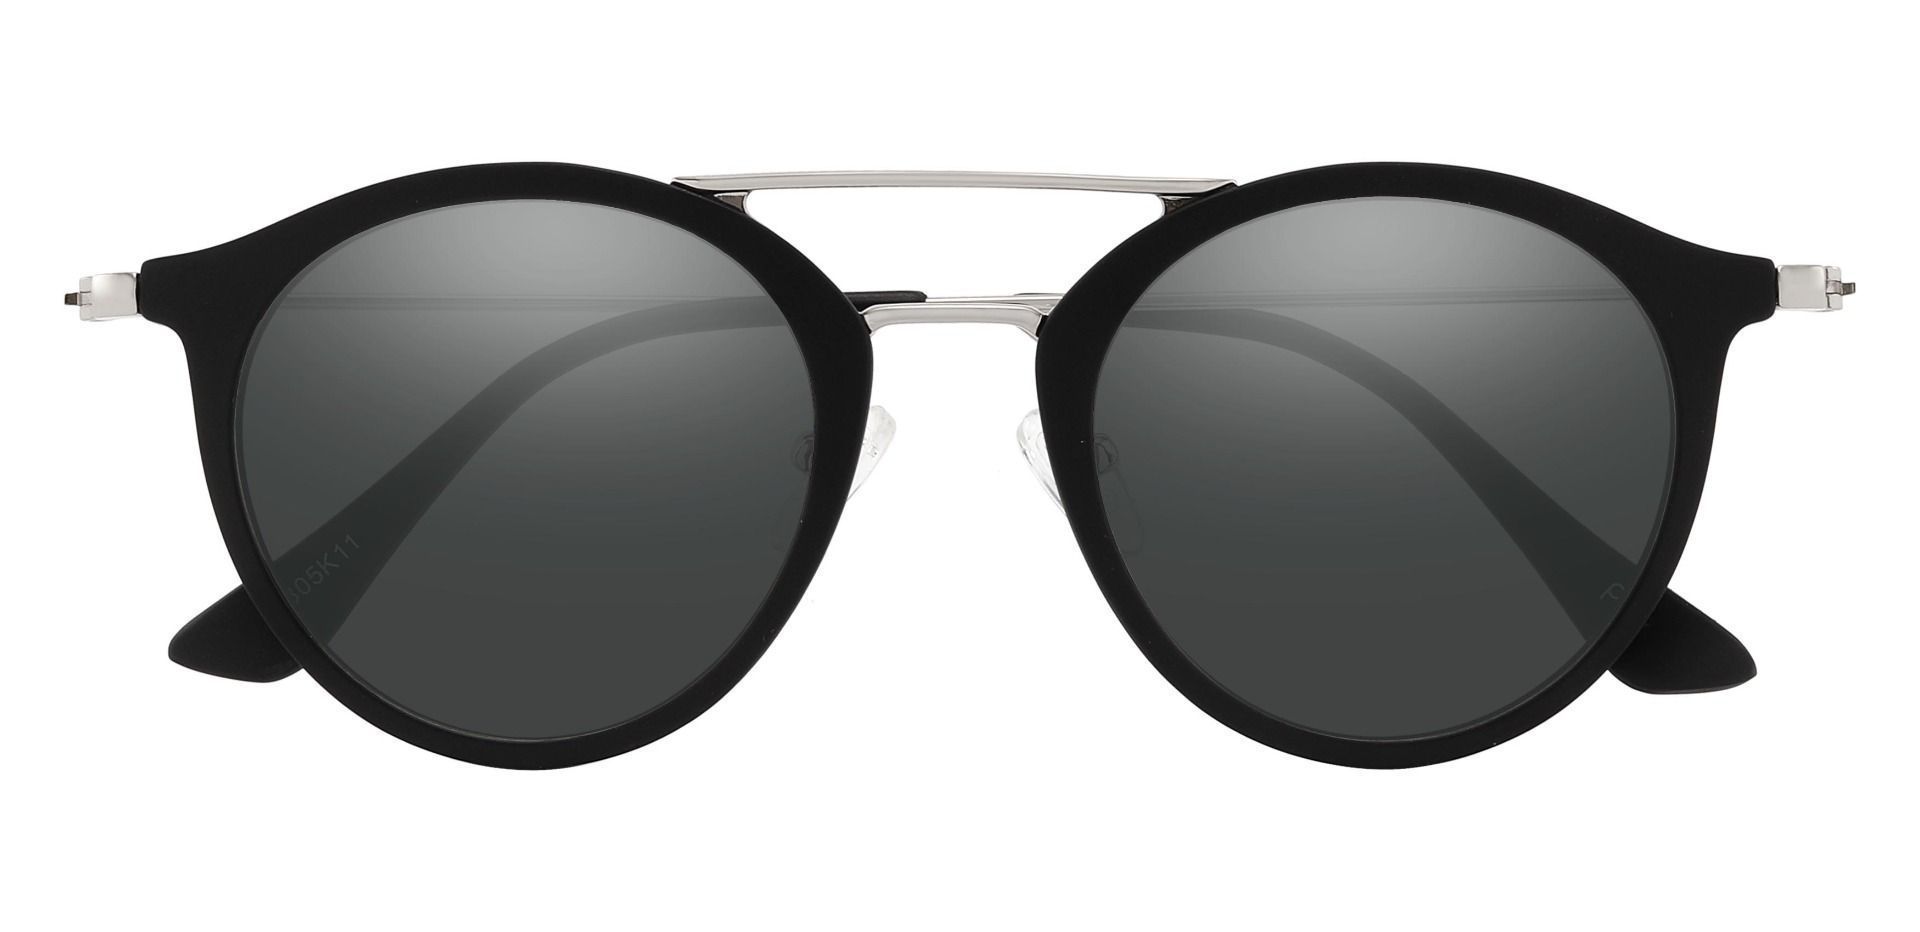 Malden Aviator Prescription Sunglasses - Black Frame With Gray Lenses